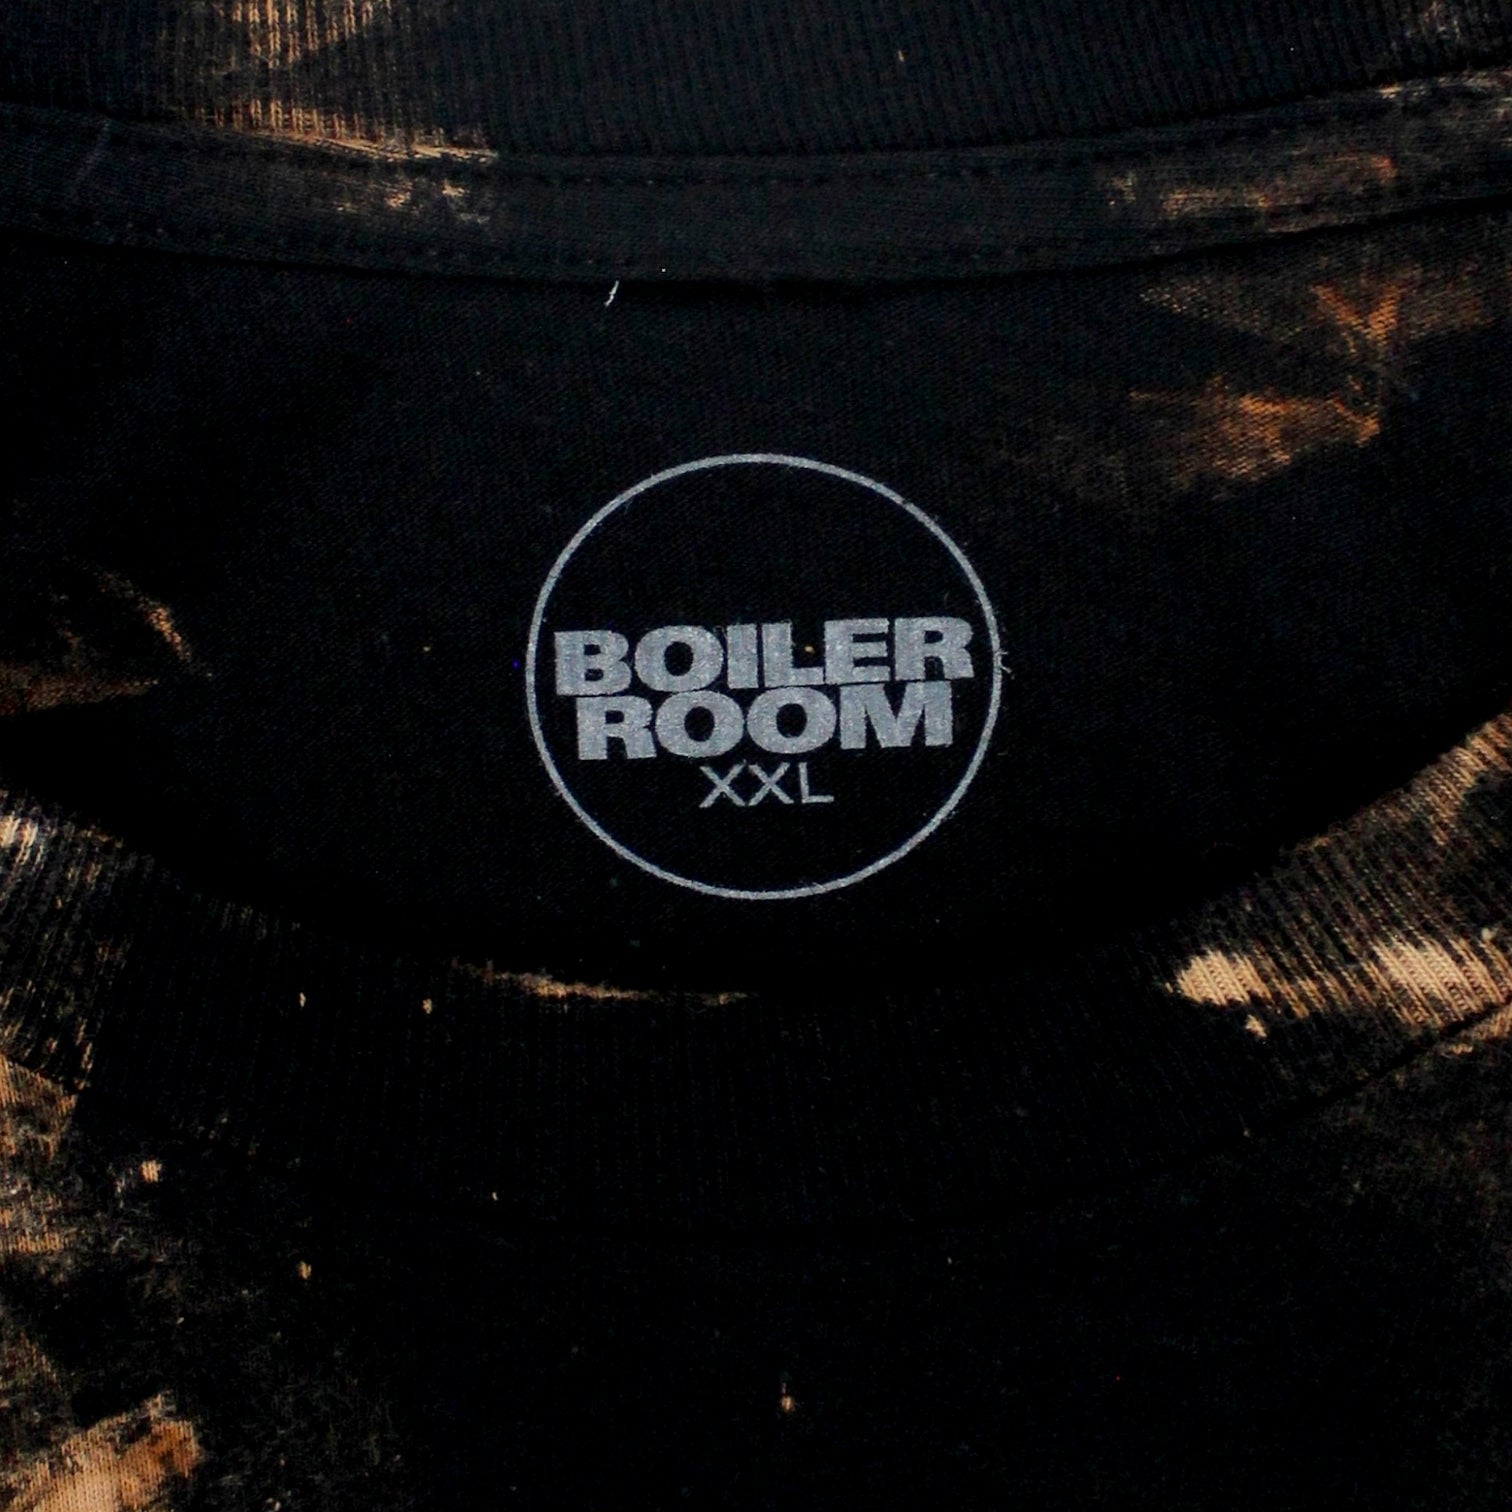 Boiler Room Black 'More Time' Bleached Tie-dye T-Shirt